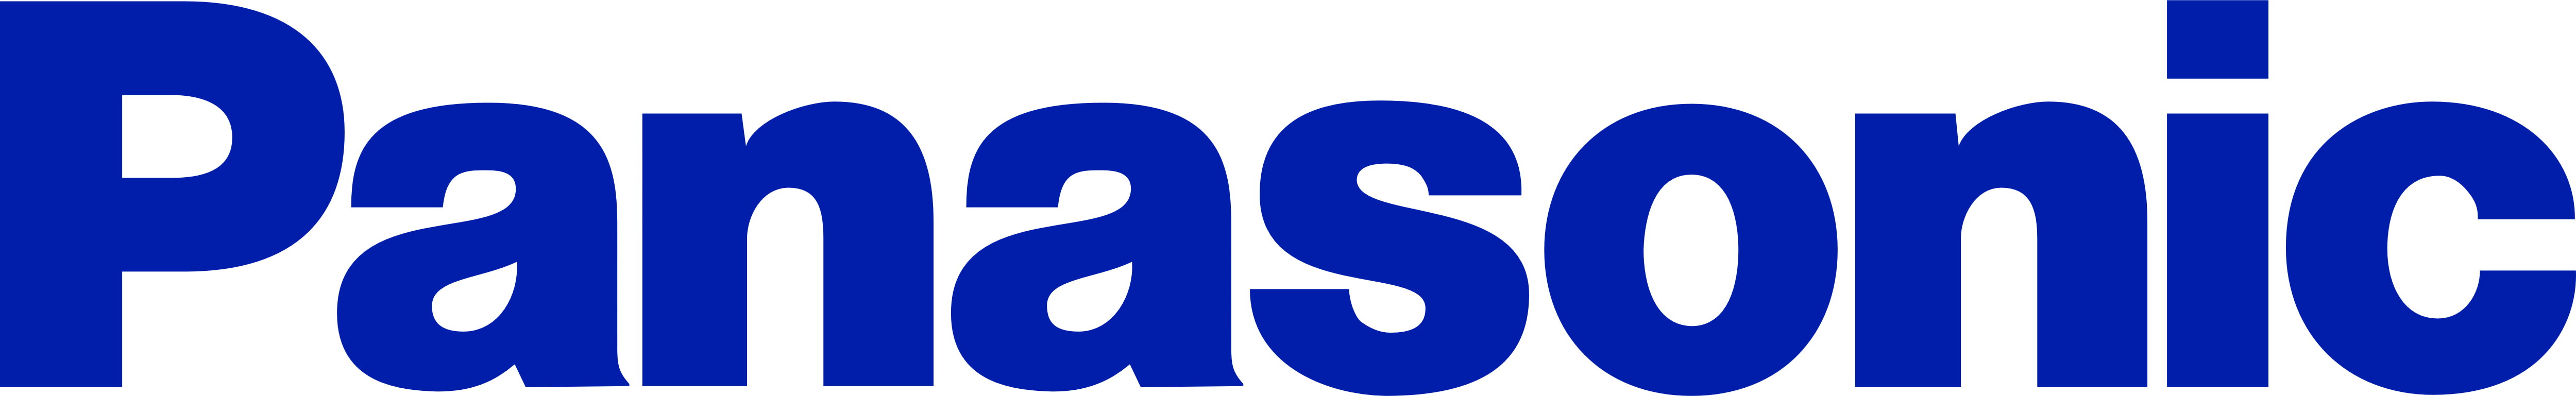 Panasonic Logo PNG - 176744